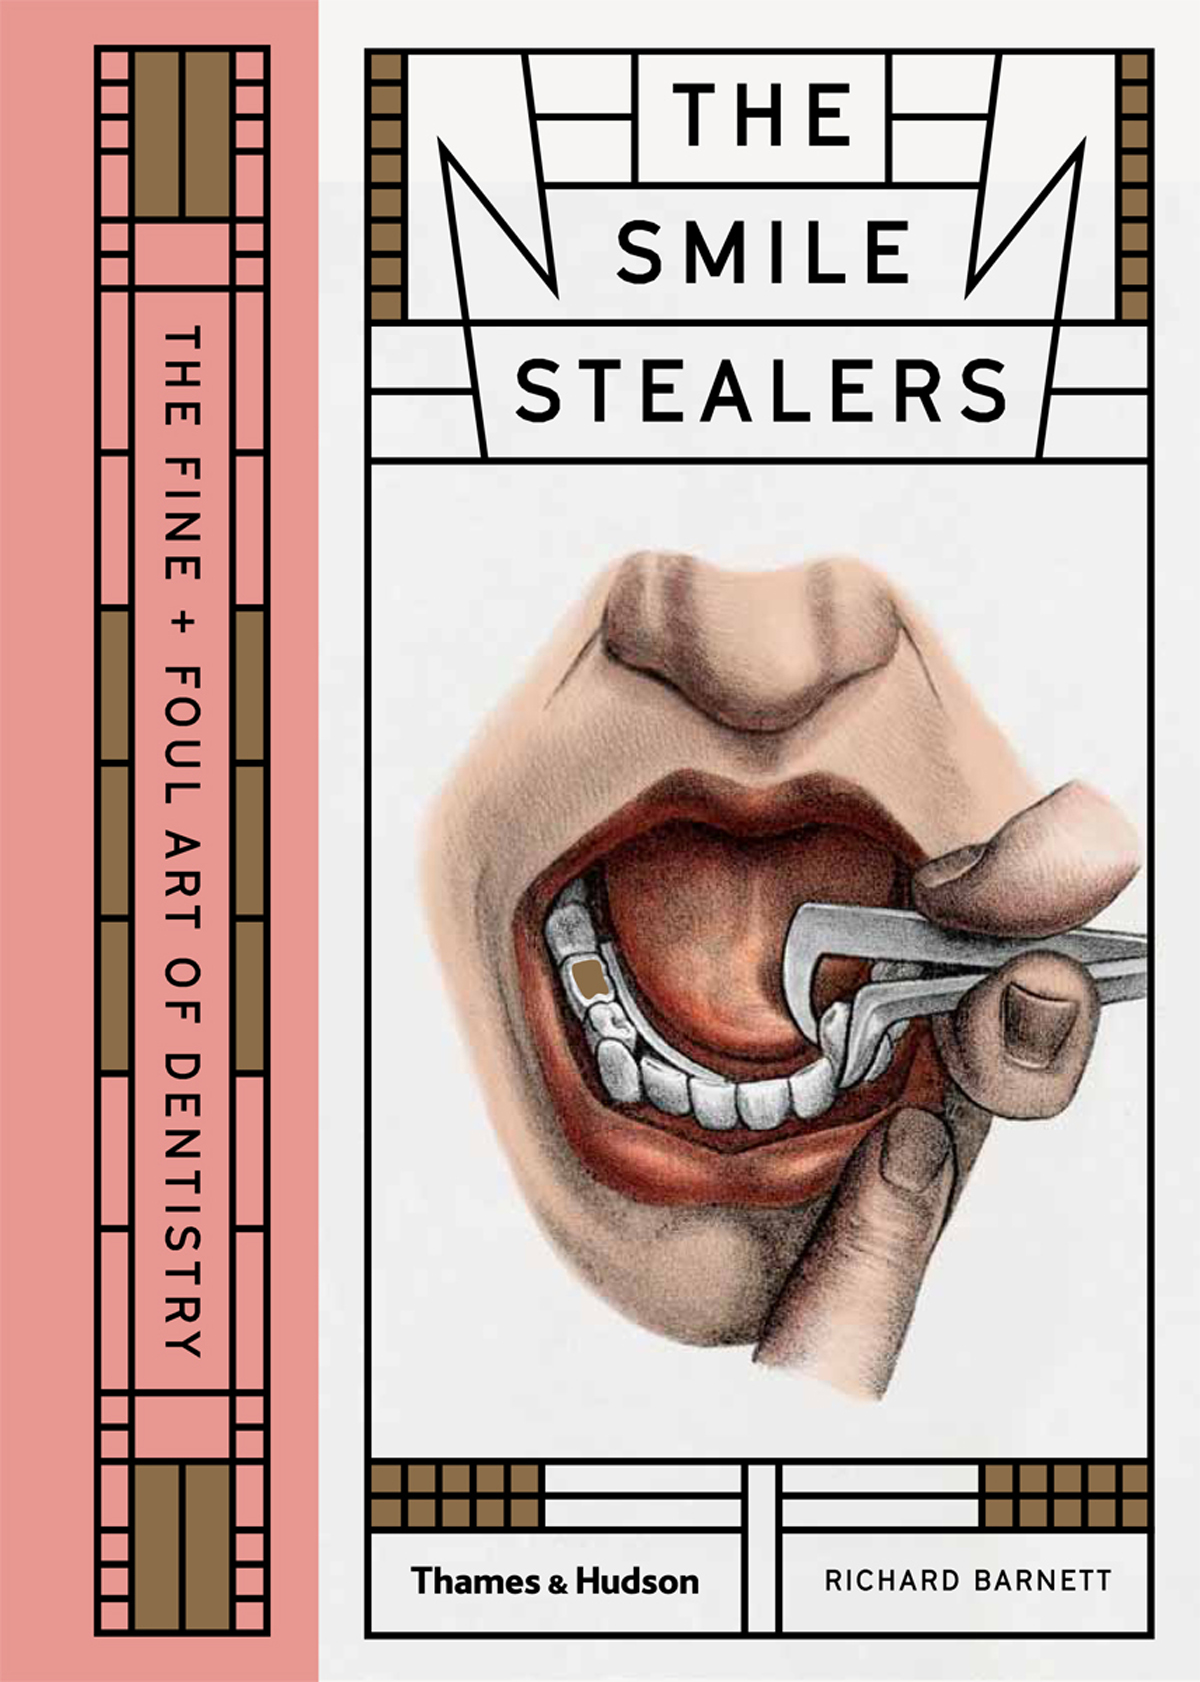 The Smile Stealer